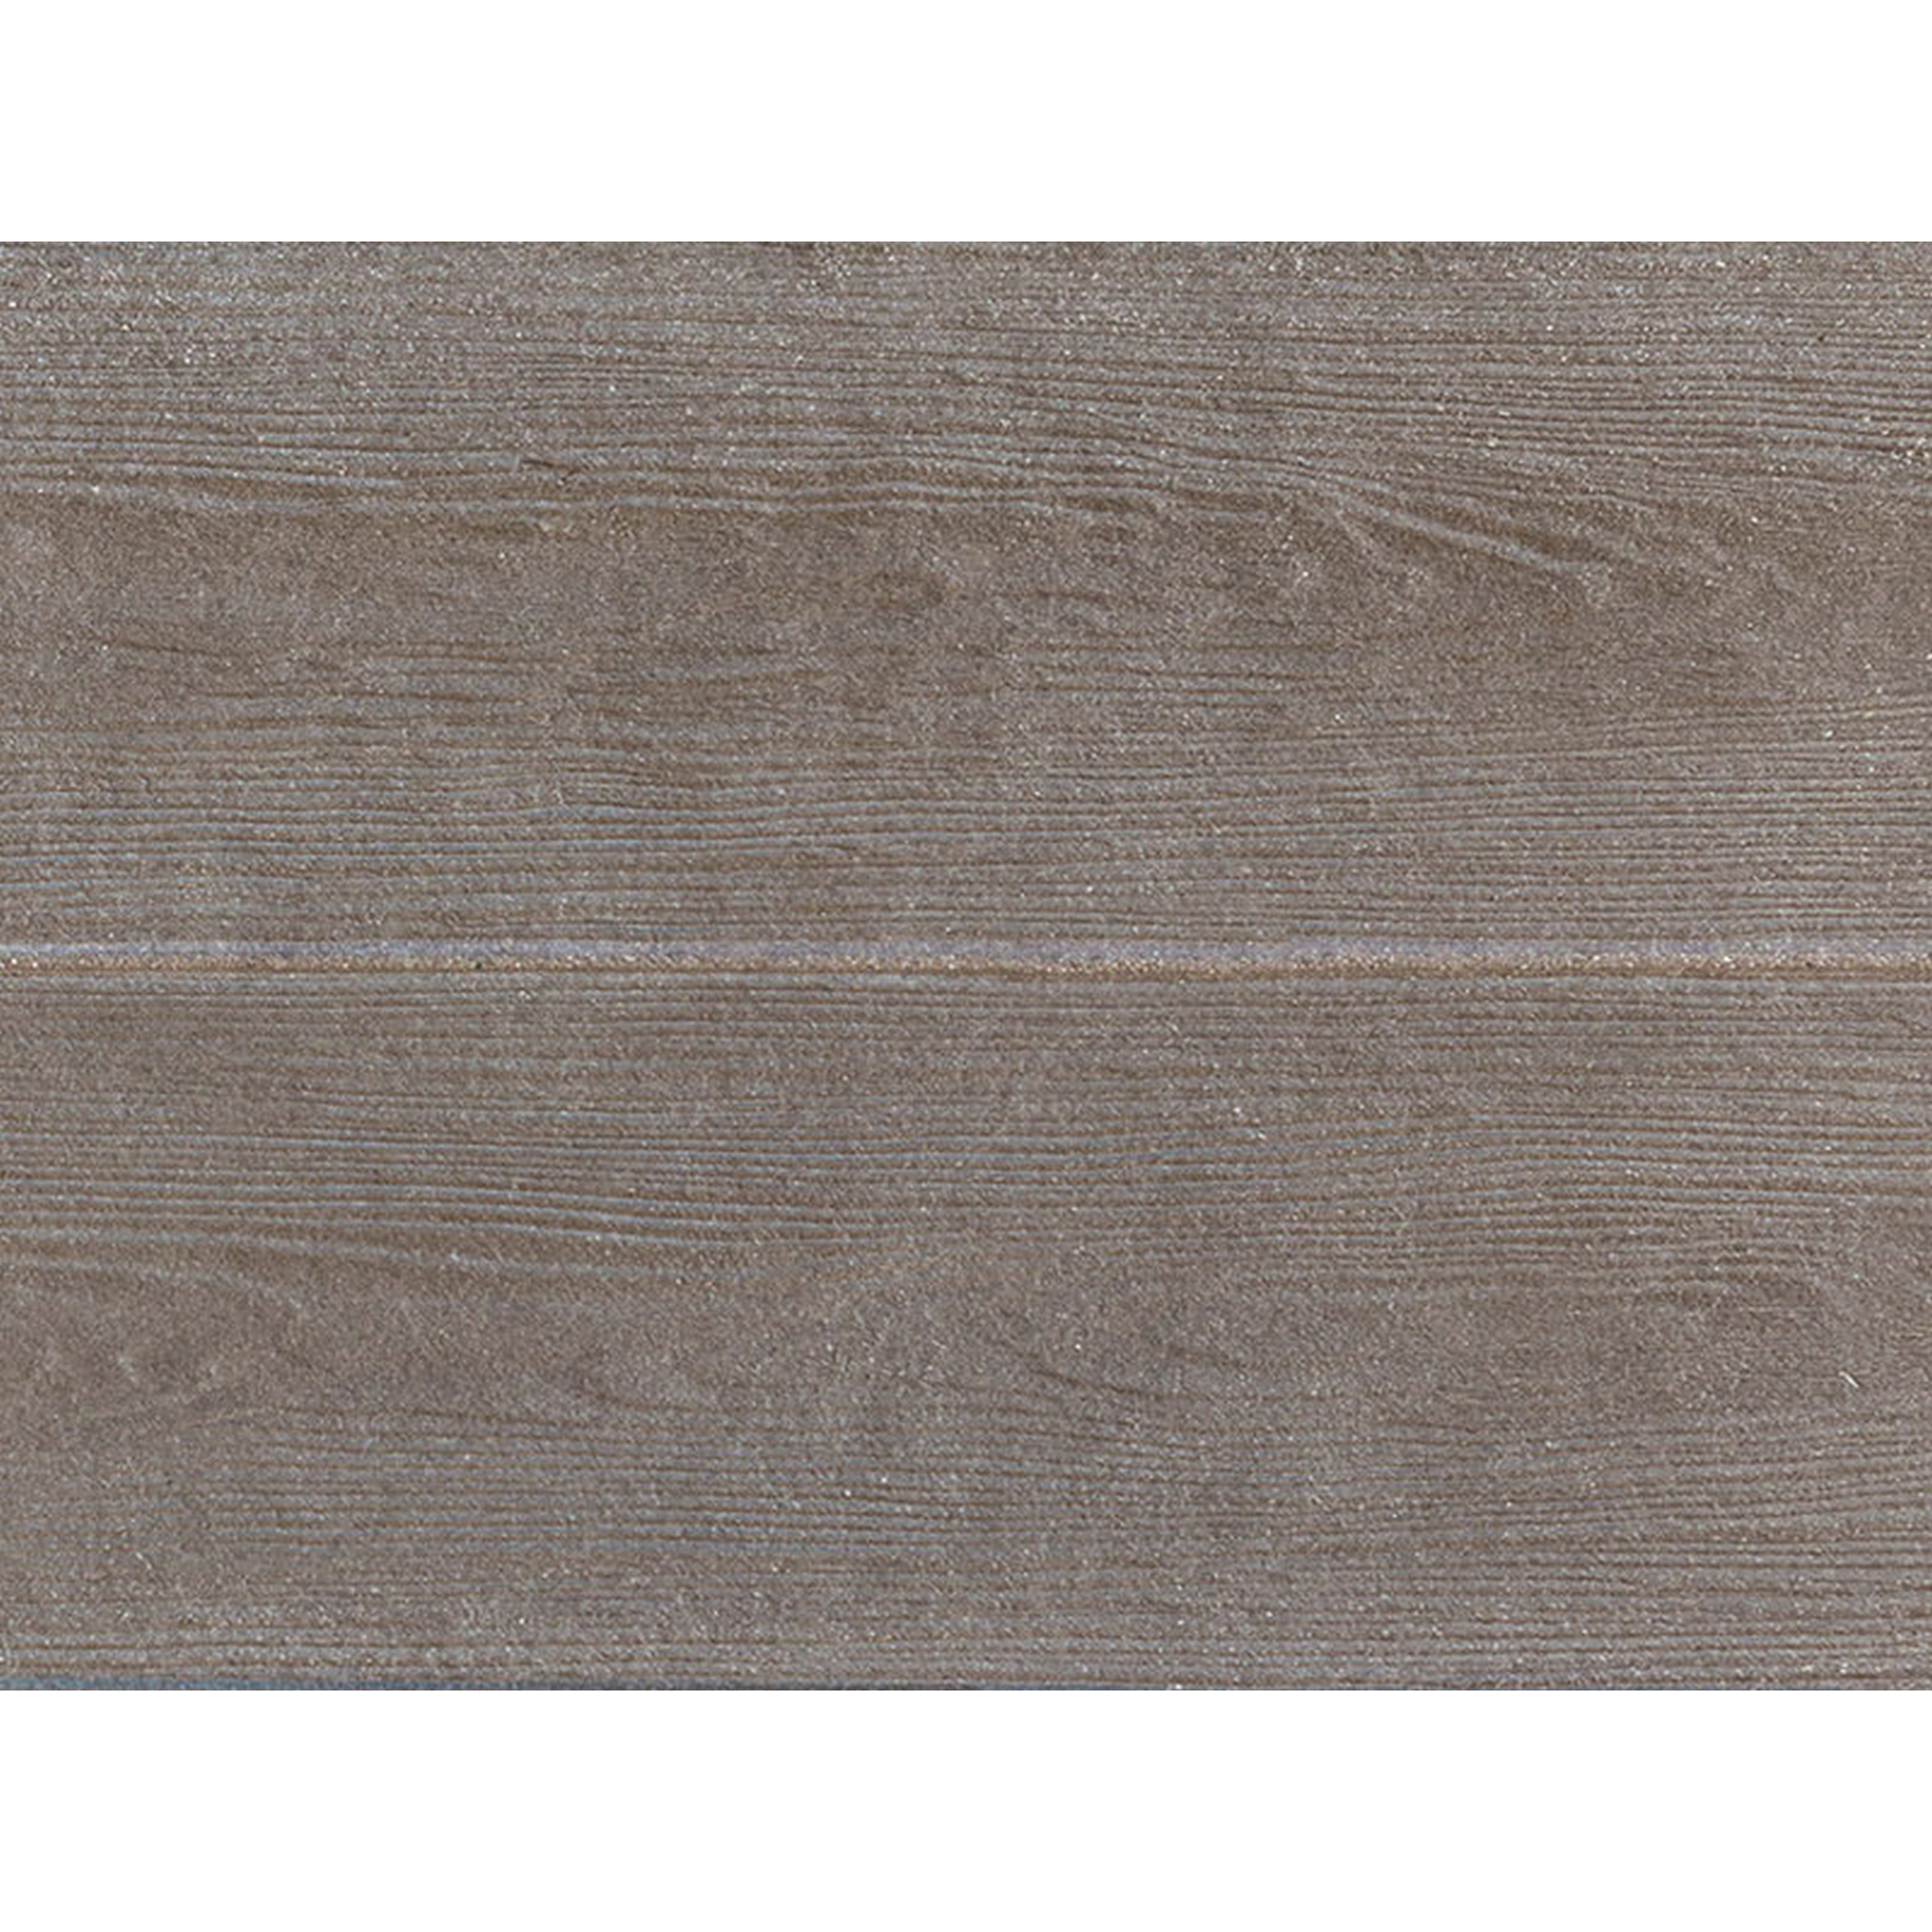 T-Court ‚Timber‘ Beton umbra 40 x 60 x 4 cm  Beton